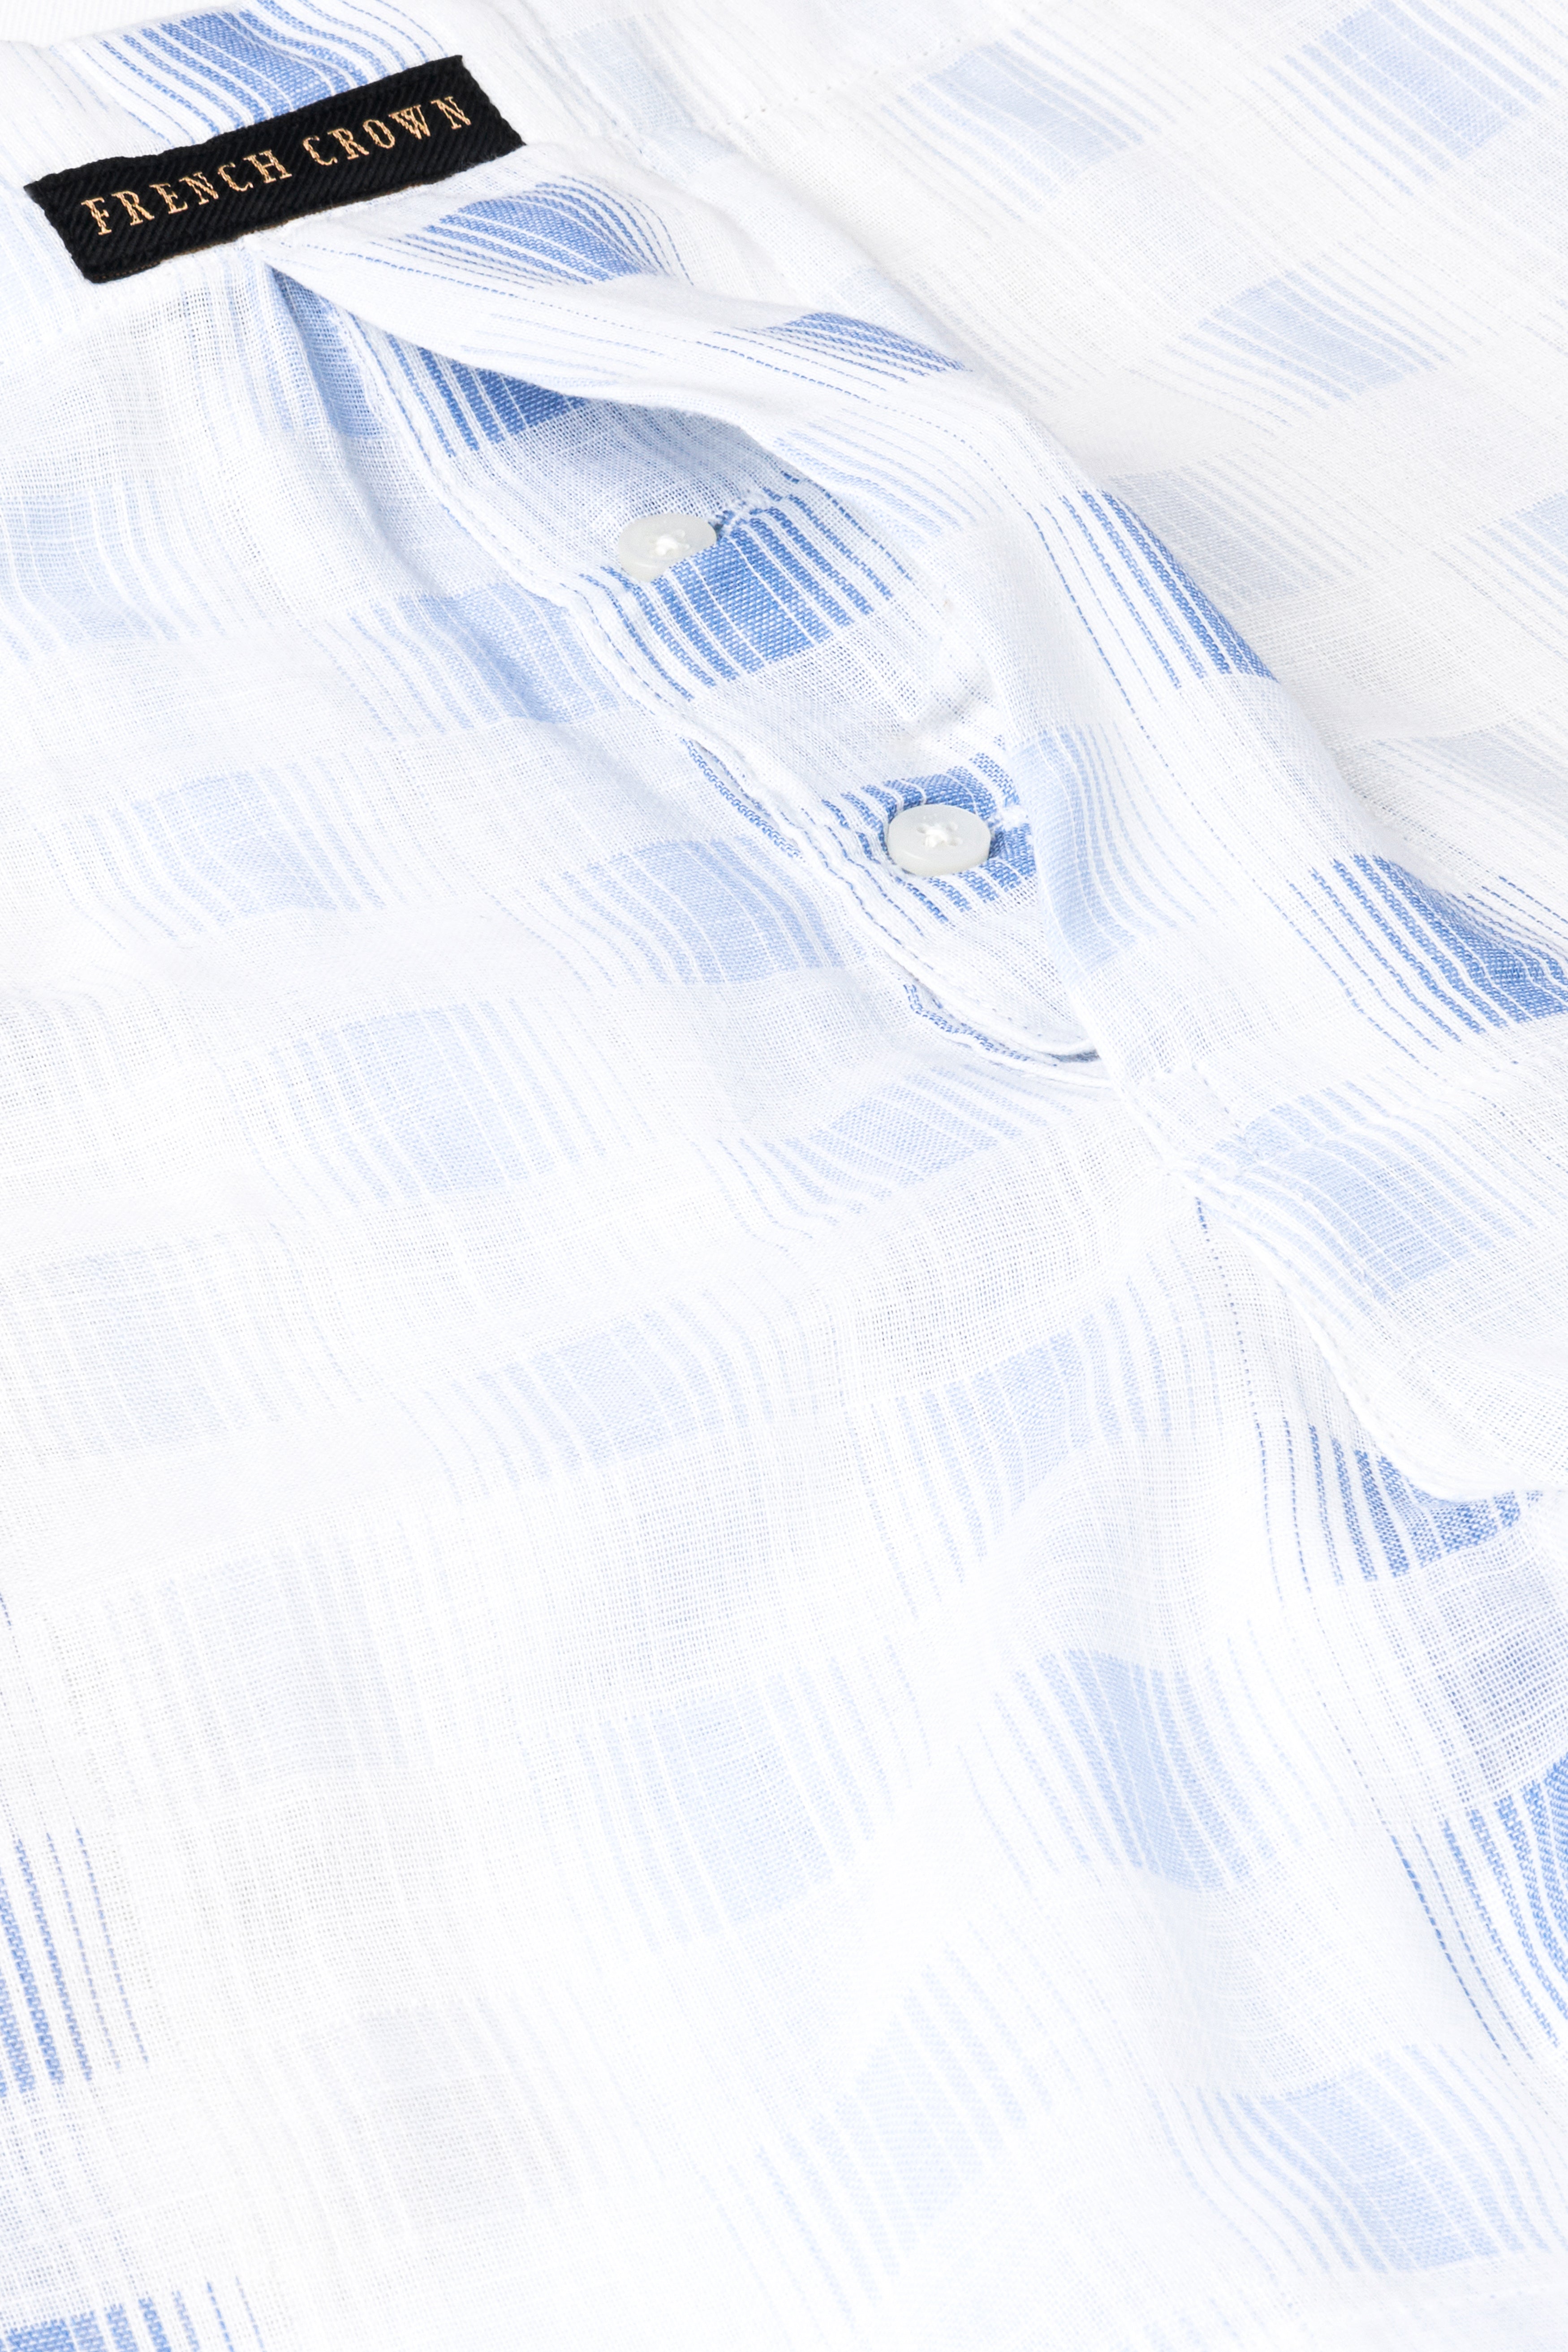 Bright White And Tealish Blue Dobby Textured Premium Giza Cotton Boxer BX549-28, BX549-30, BX549-32, BX549-34, BX549-36, BX549-38, BX549-40, BX549-42, BX549-44